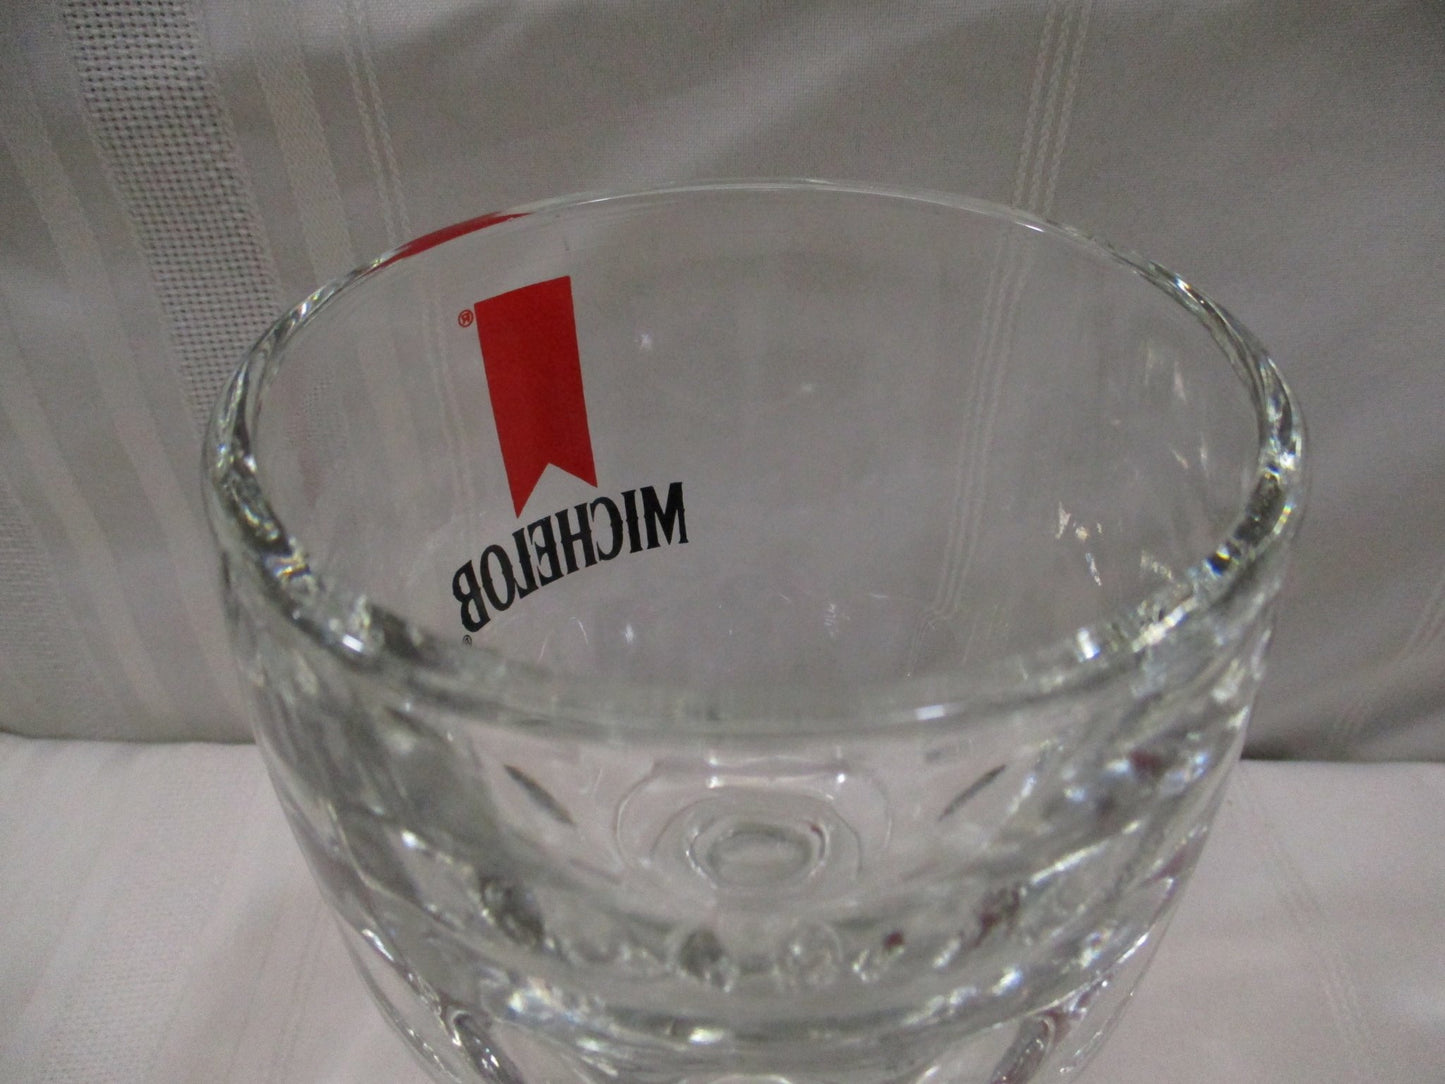 Michelob Pedestal Silkscreened Beer Glass [74686 - Cactus Jax Unique Collectibles